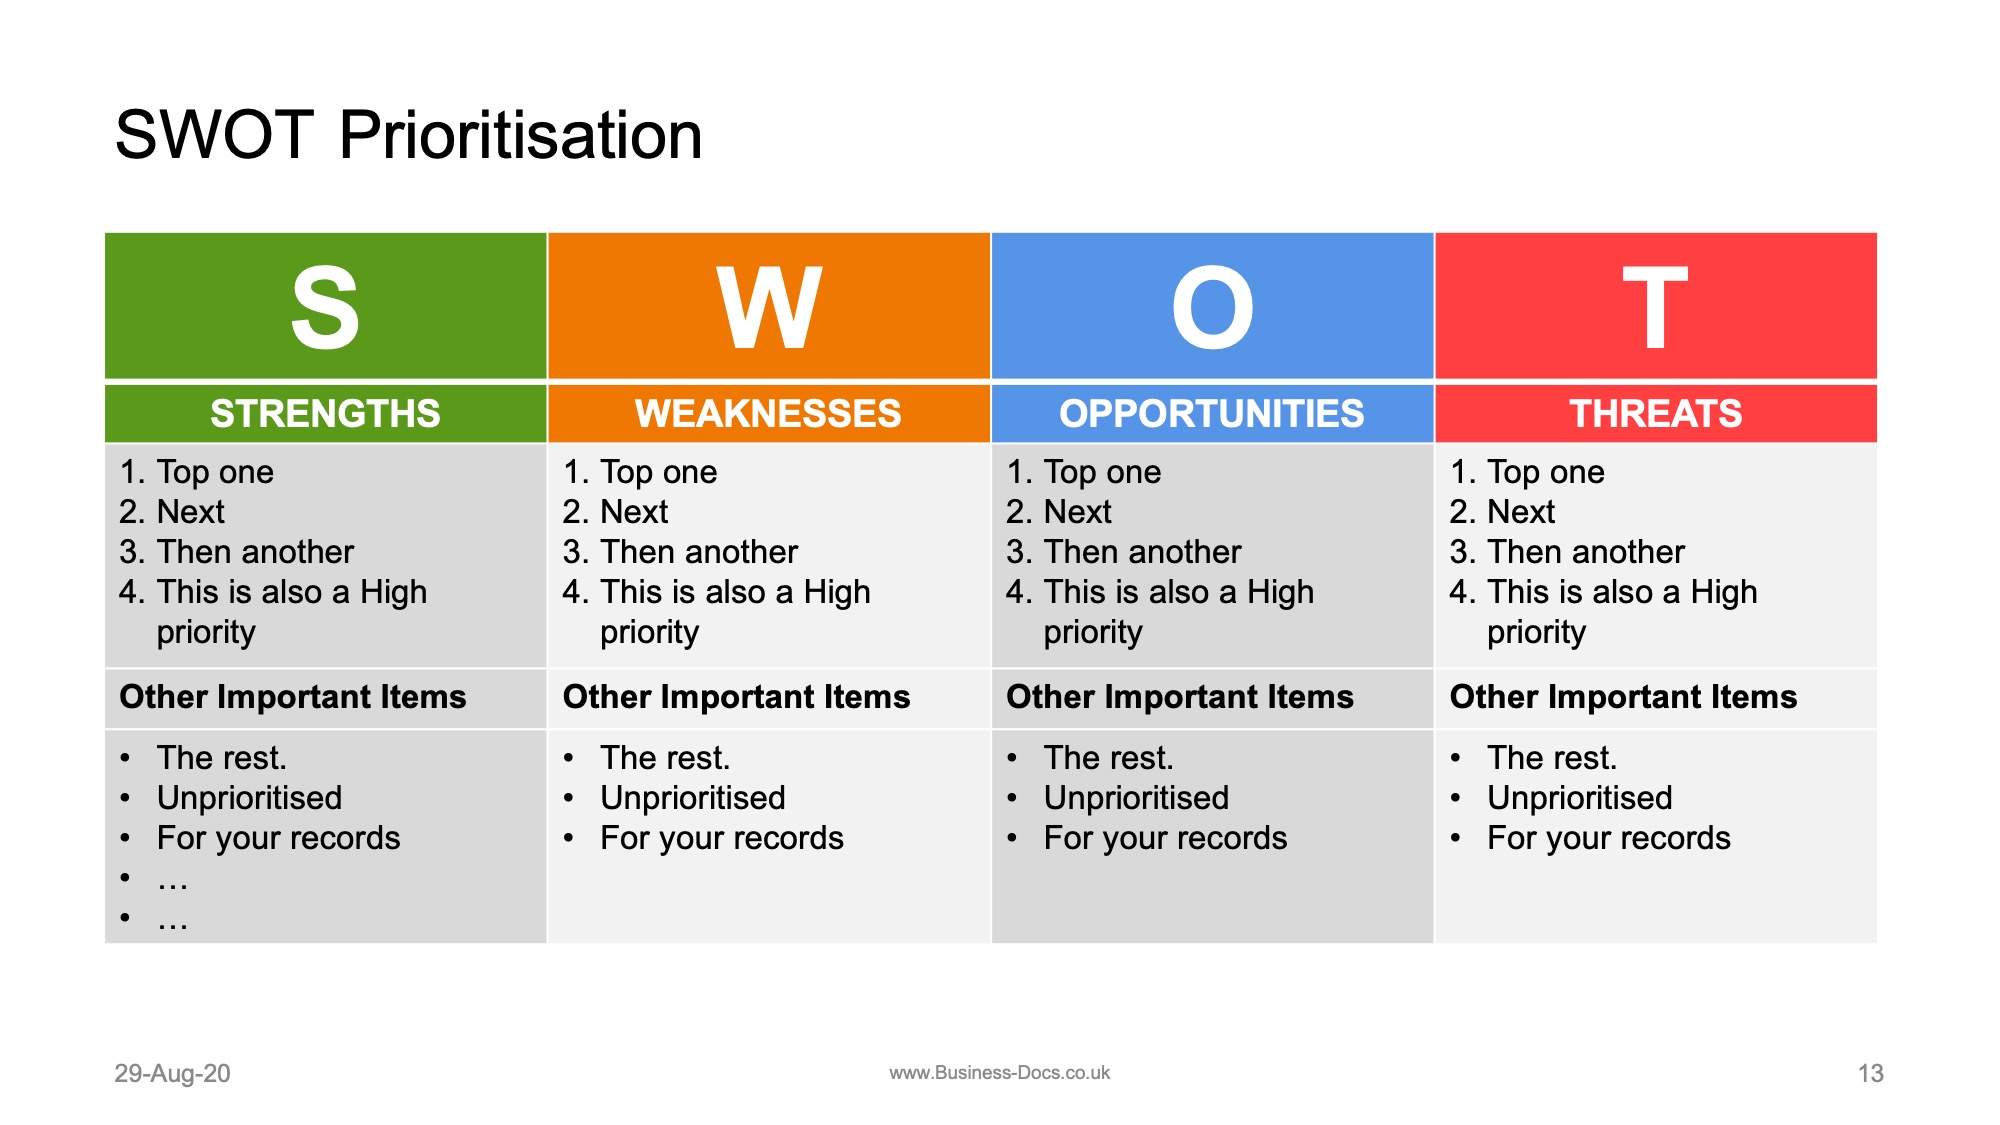 SWOT Prioritization - in a workshop